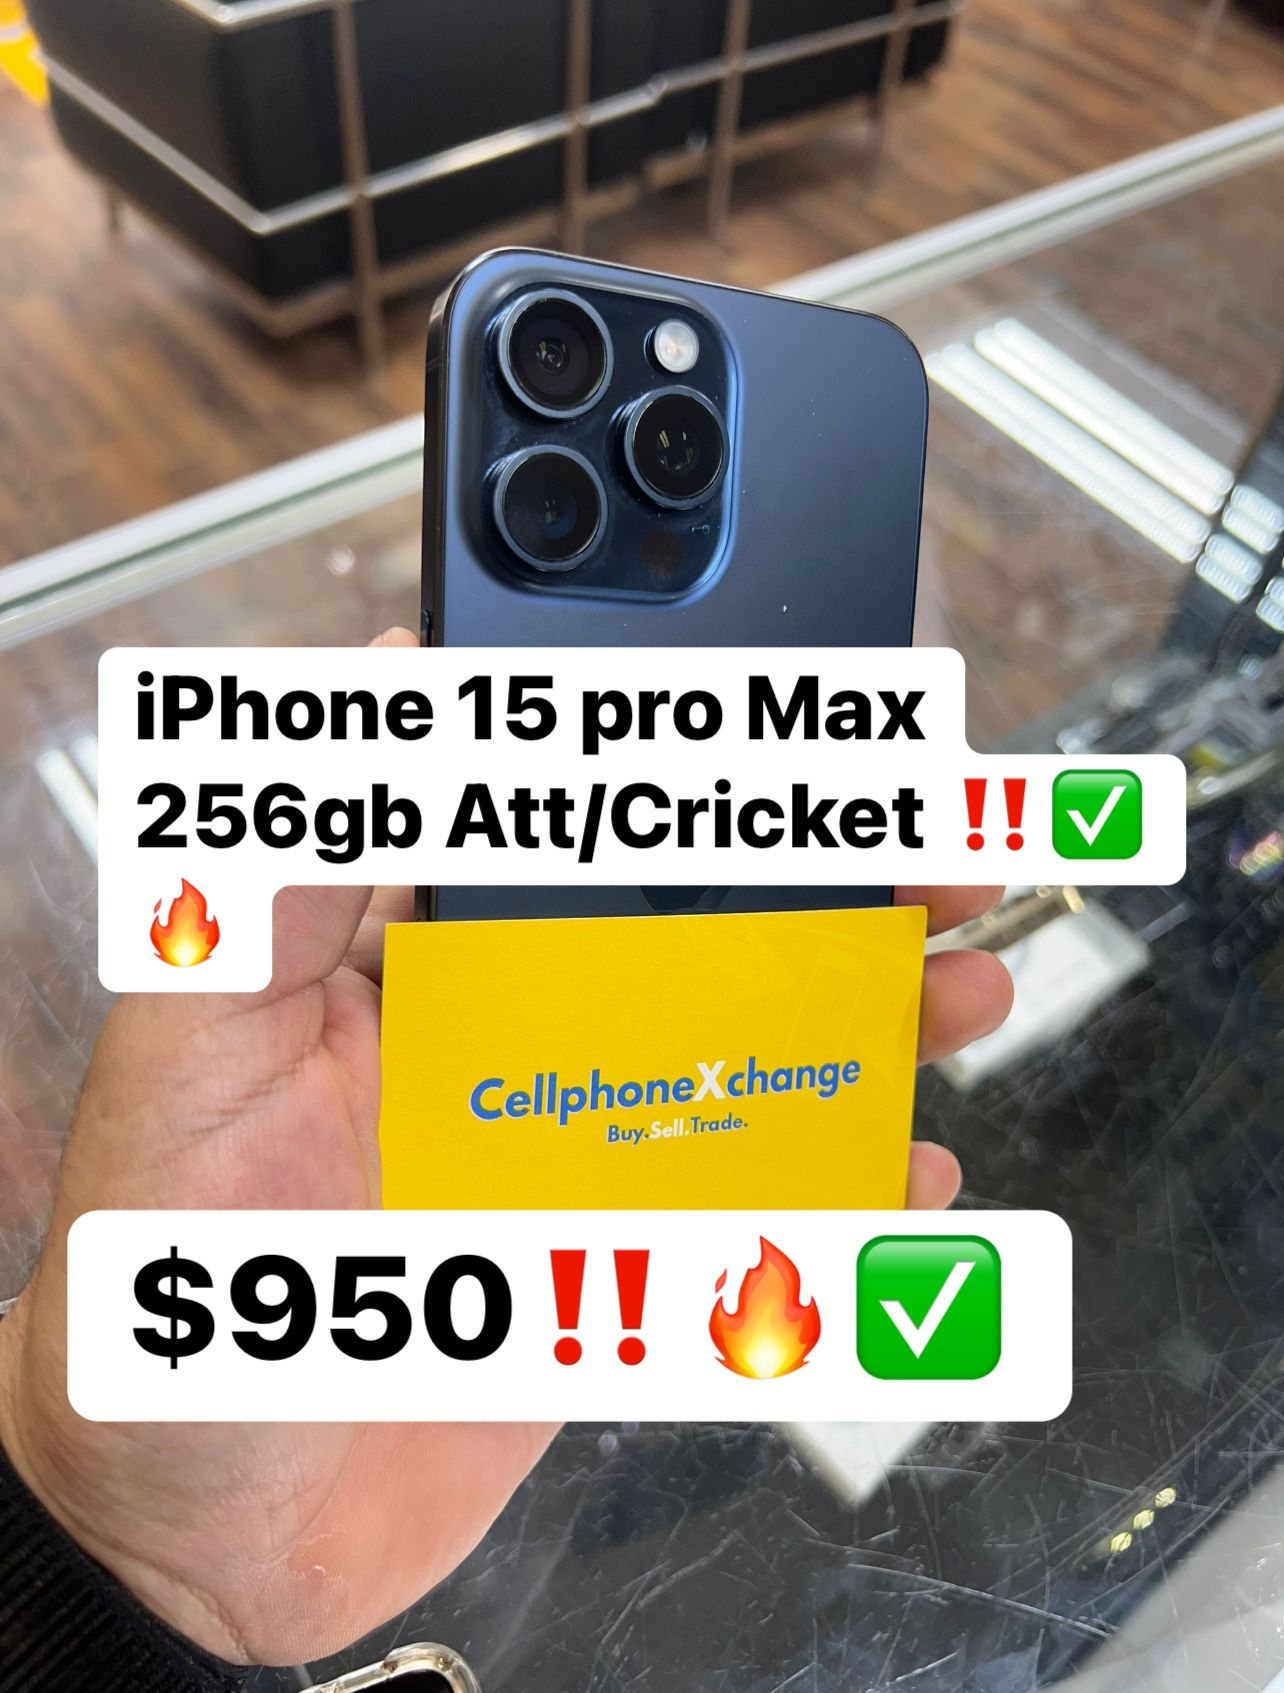 iPhone 15 Pro Max 256gb Att/Cricket 